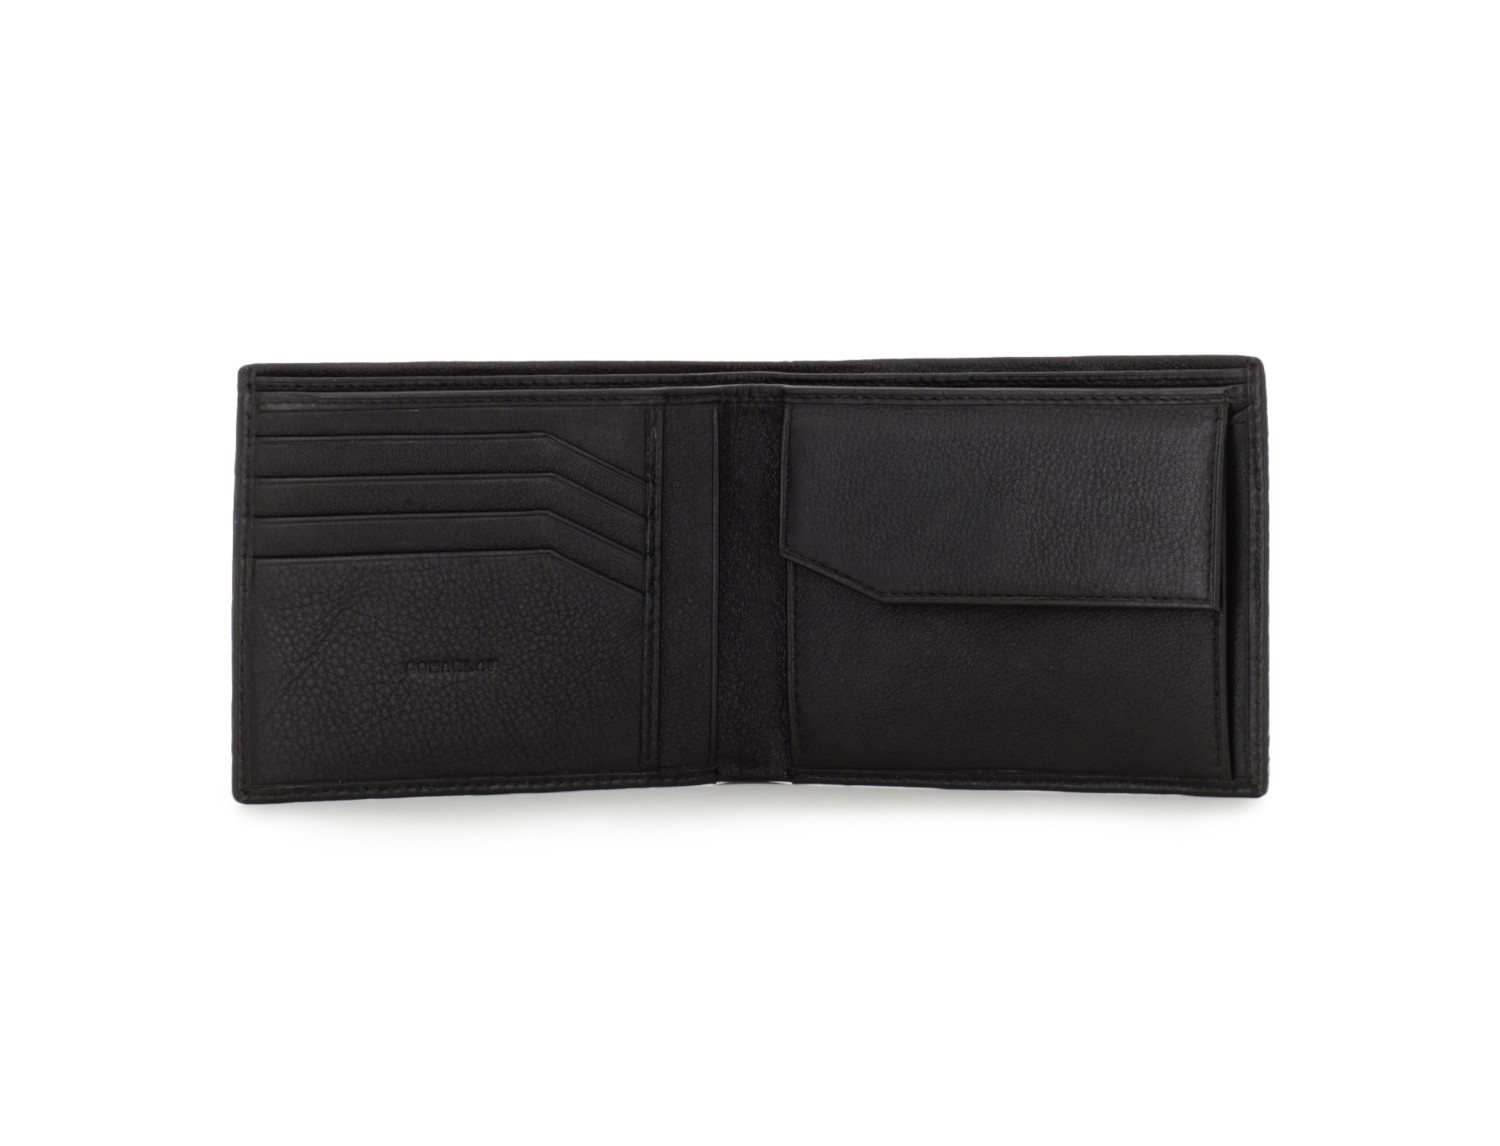 leather wallet for men in black open